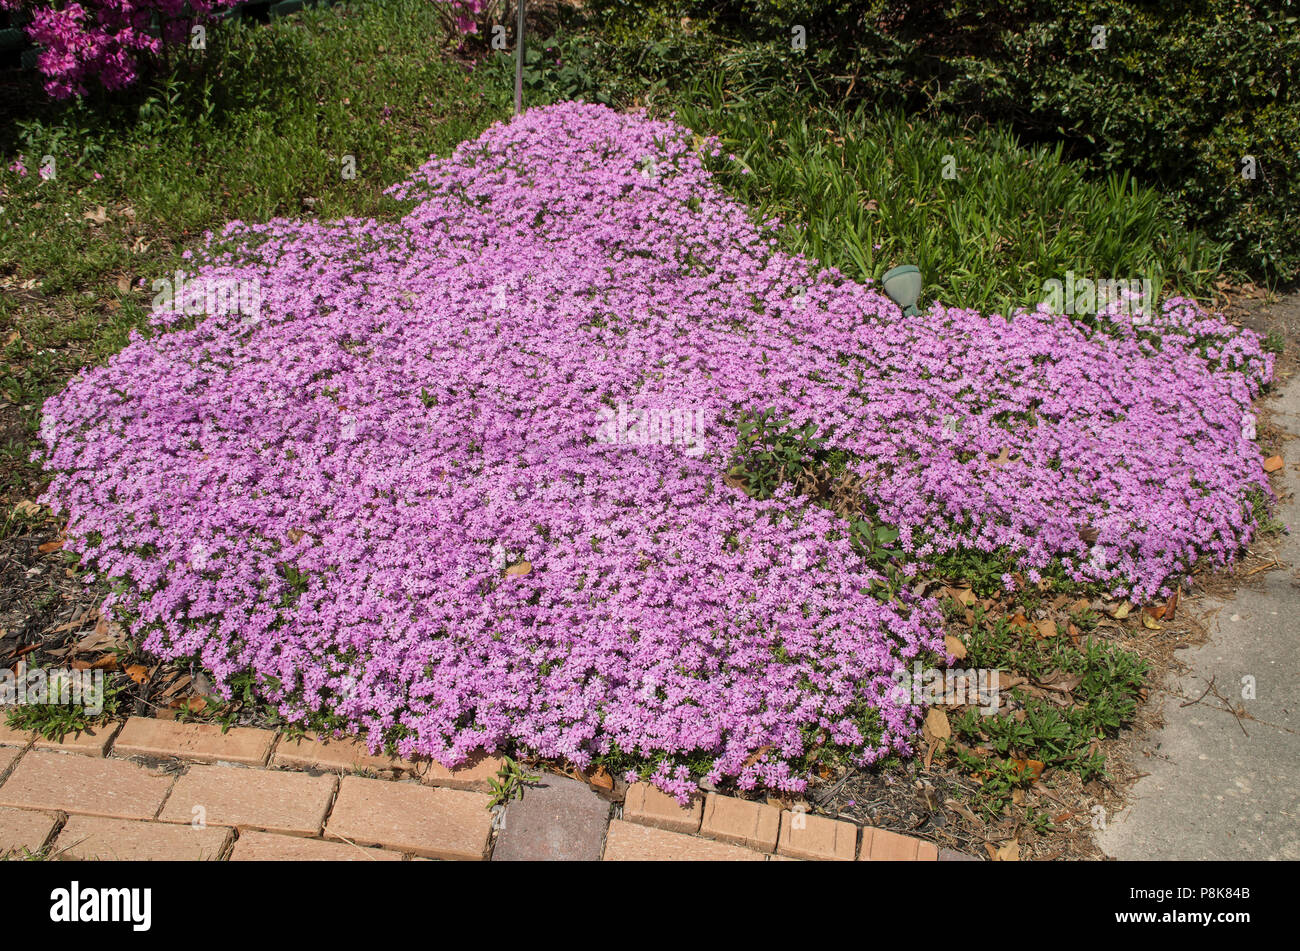 A beautiful rug of Purple Phlox coveres a garden in New Bern North Carolina Stock Photo